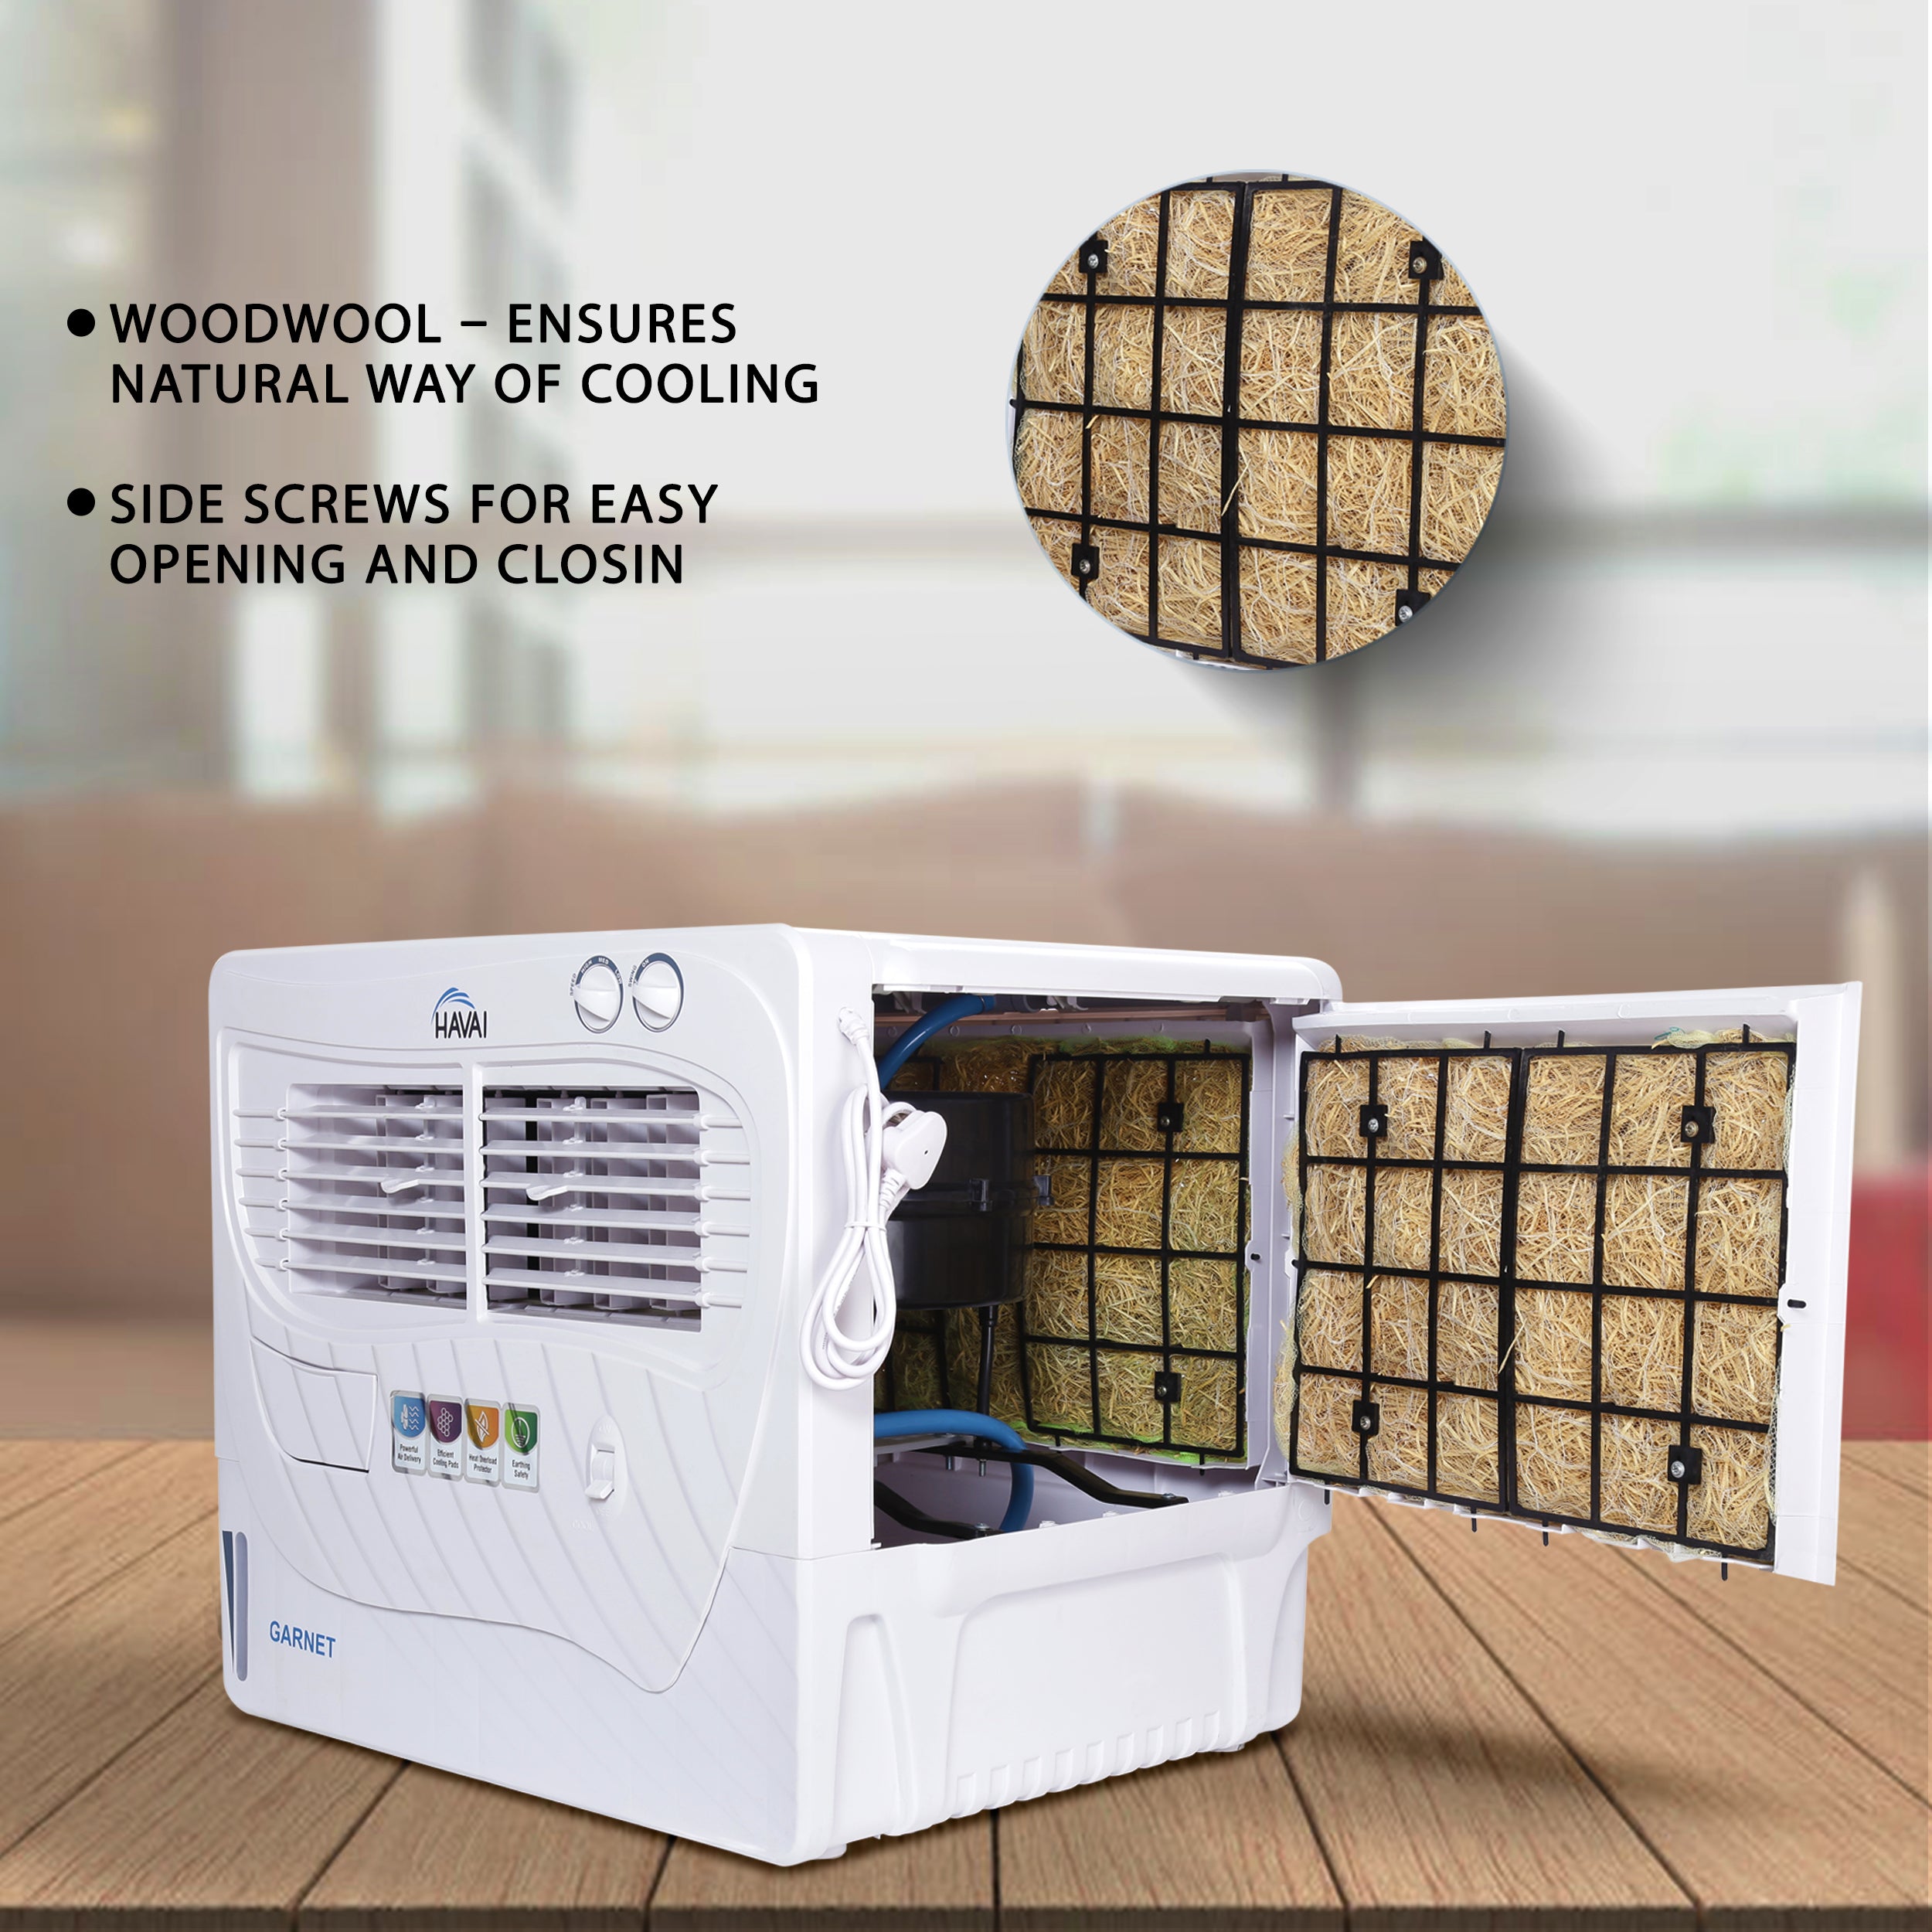 HAVAI Garnet Window Cooler with Powerful Blower - 50 L, Woodwool